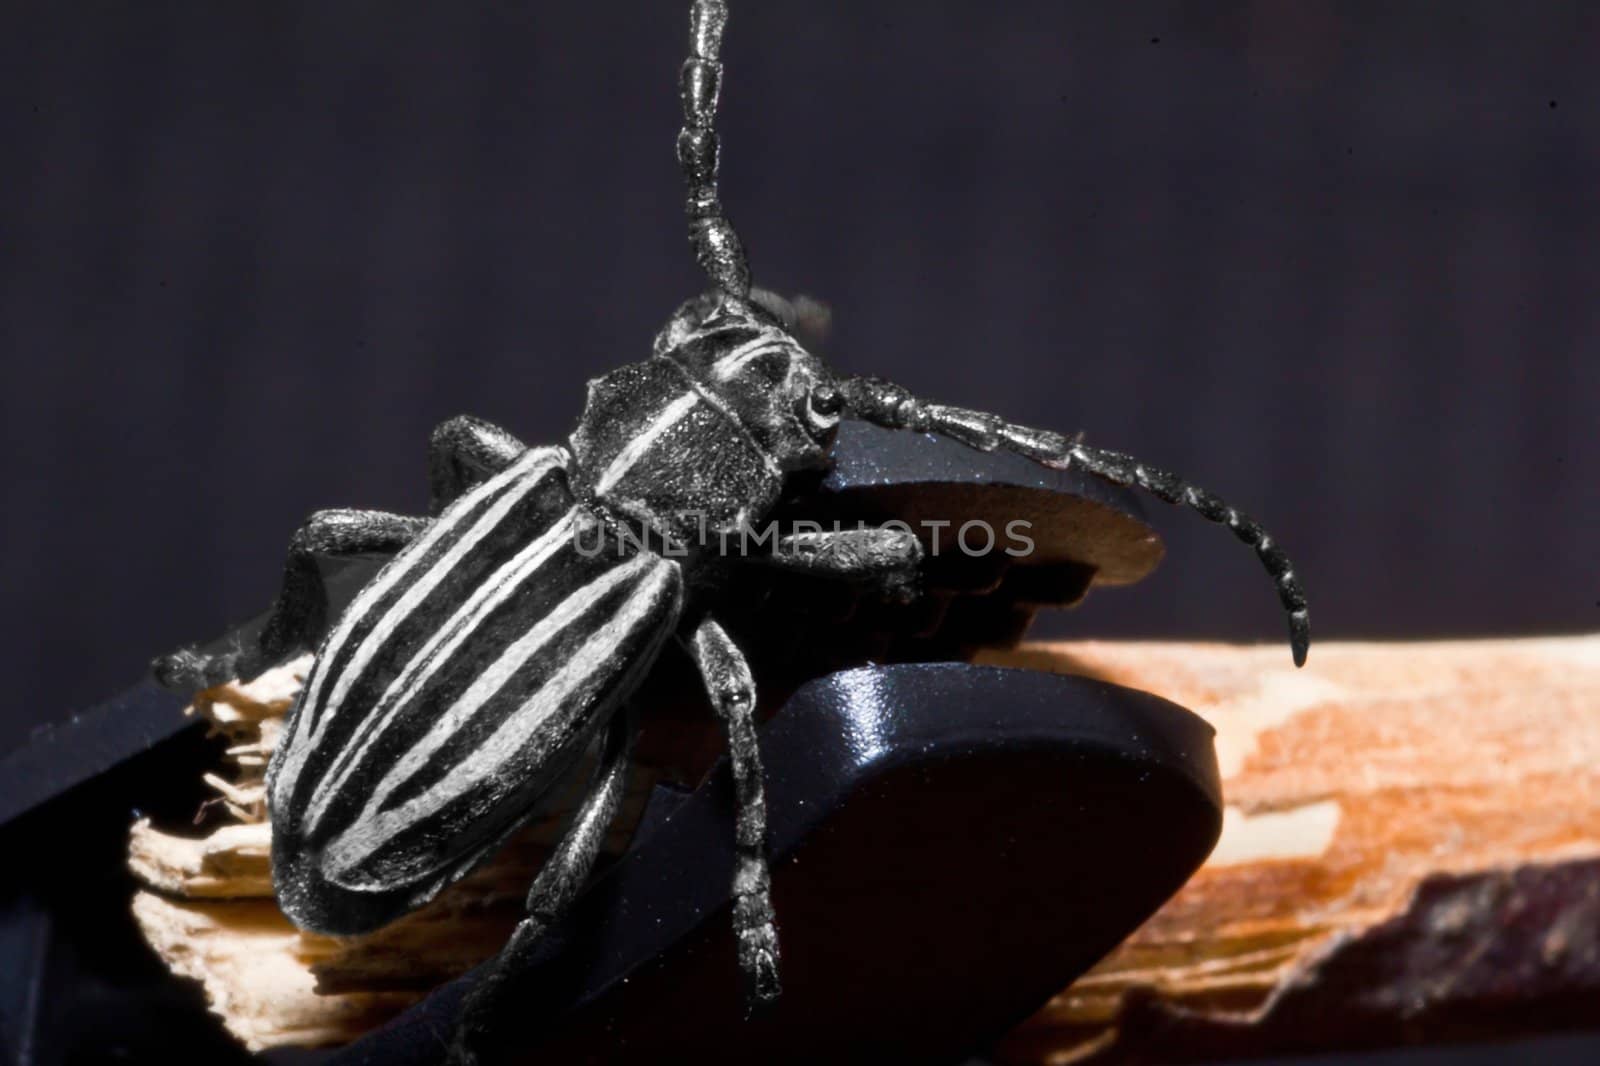 Weaver beetle (Lamia textor) by chuckyq1